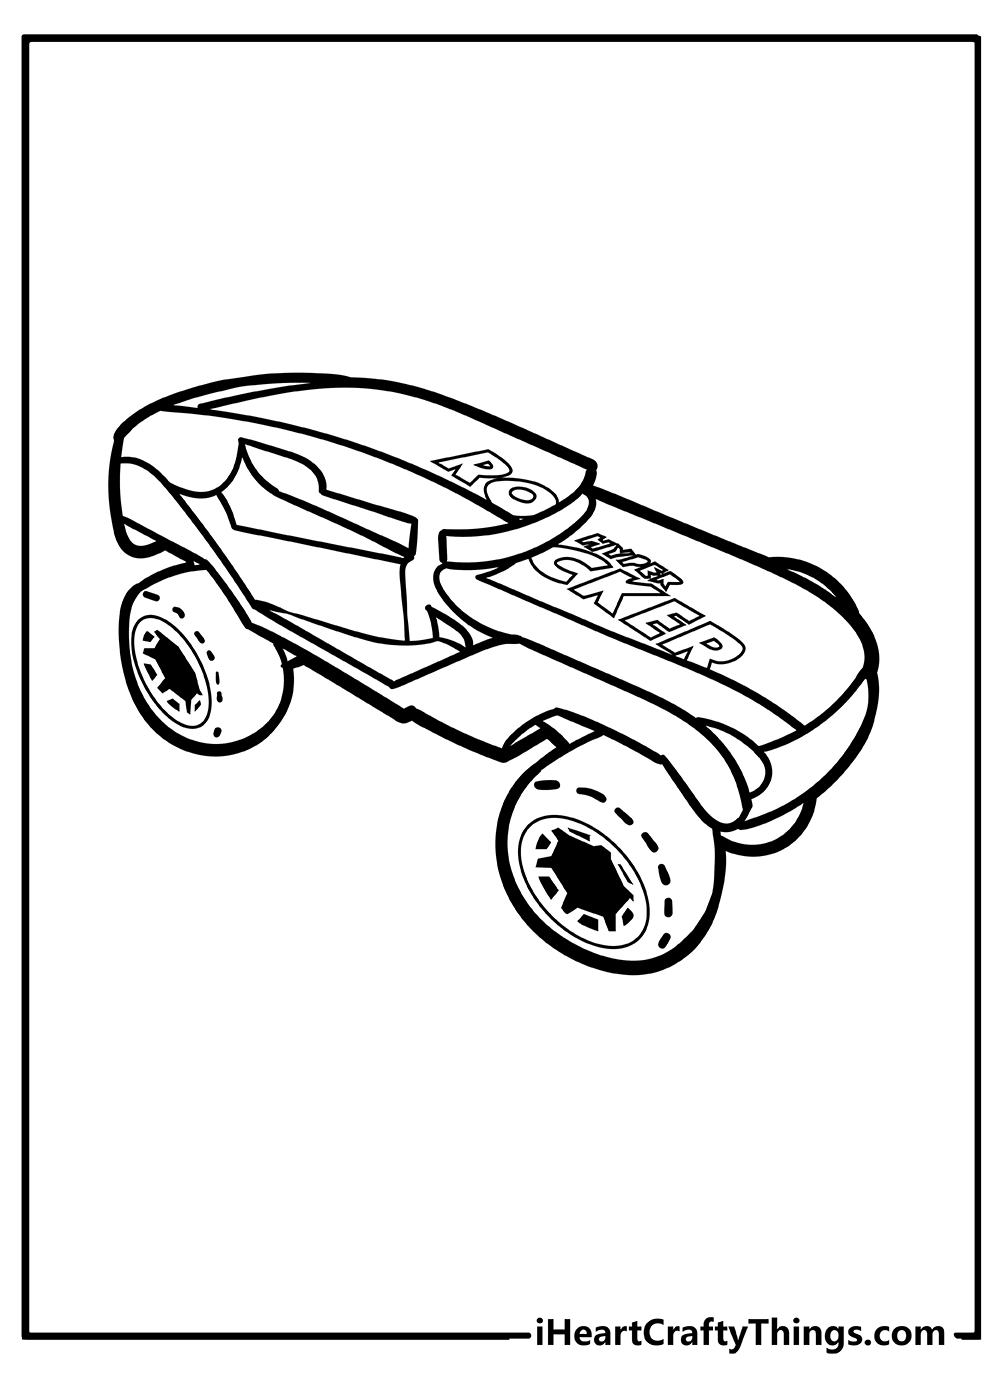 Hot Wheels Coloring Original Sheet for children free download